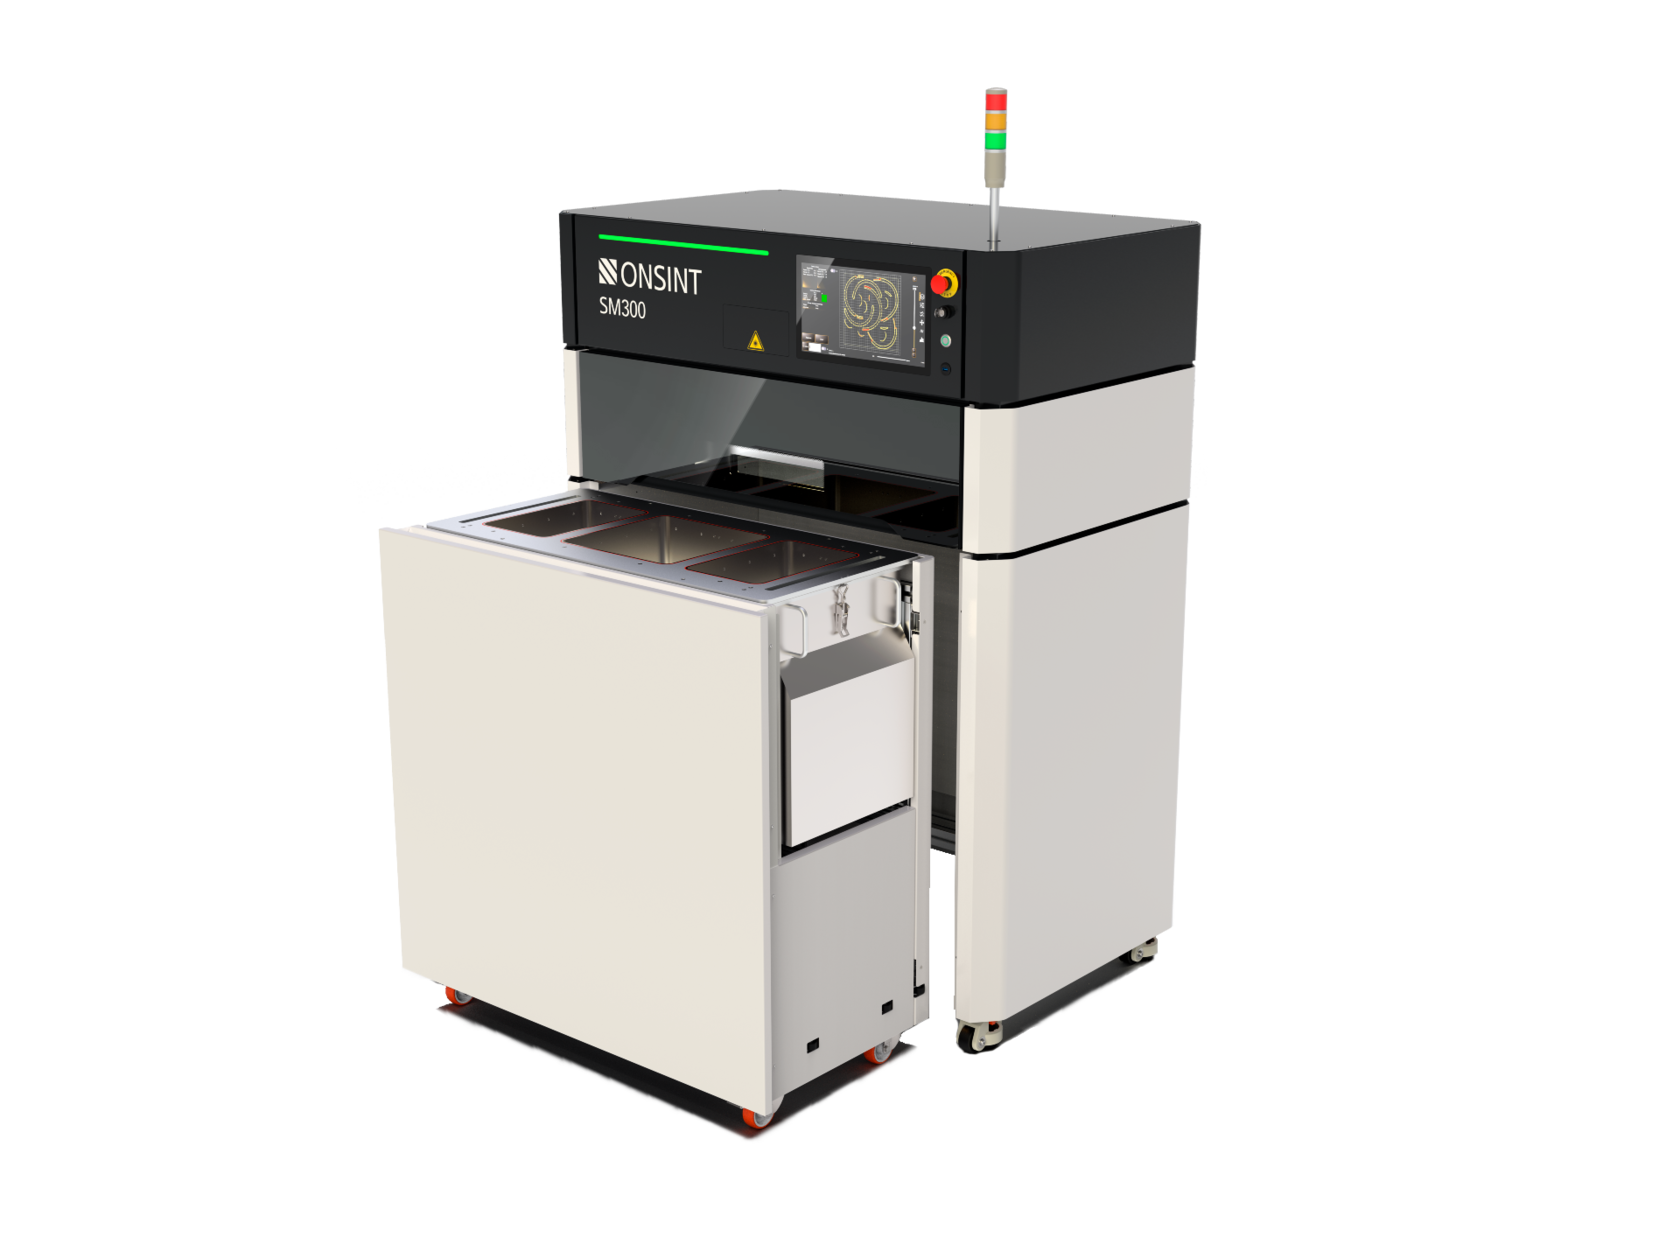 3D принтер Onsint SM300